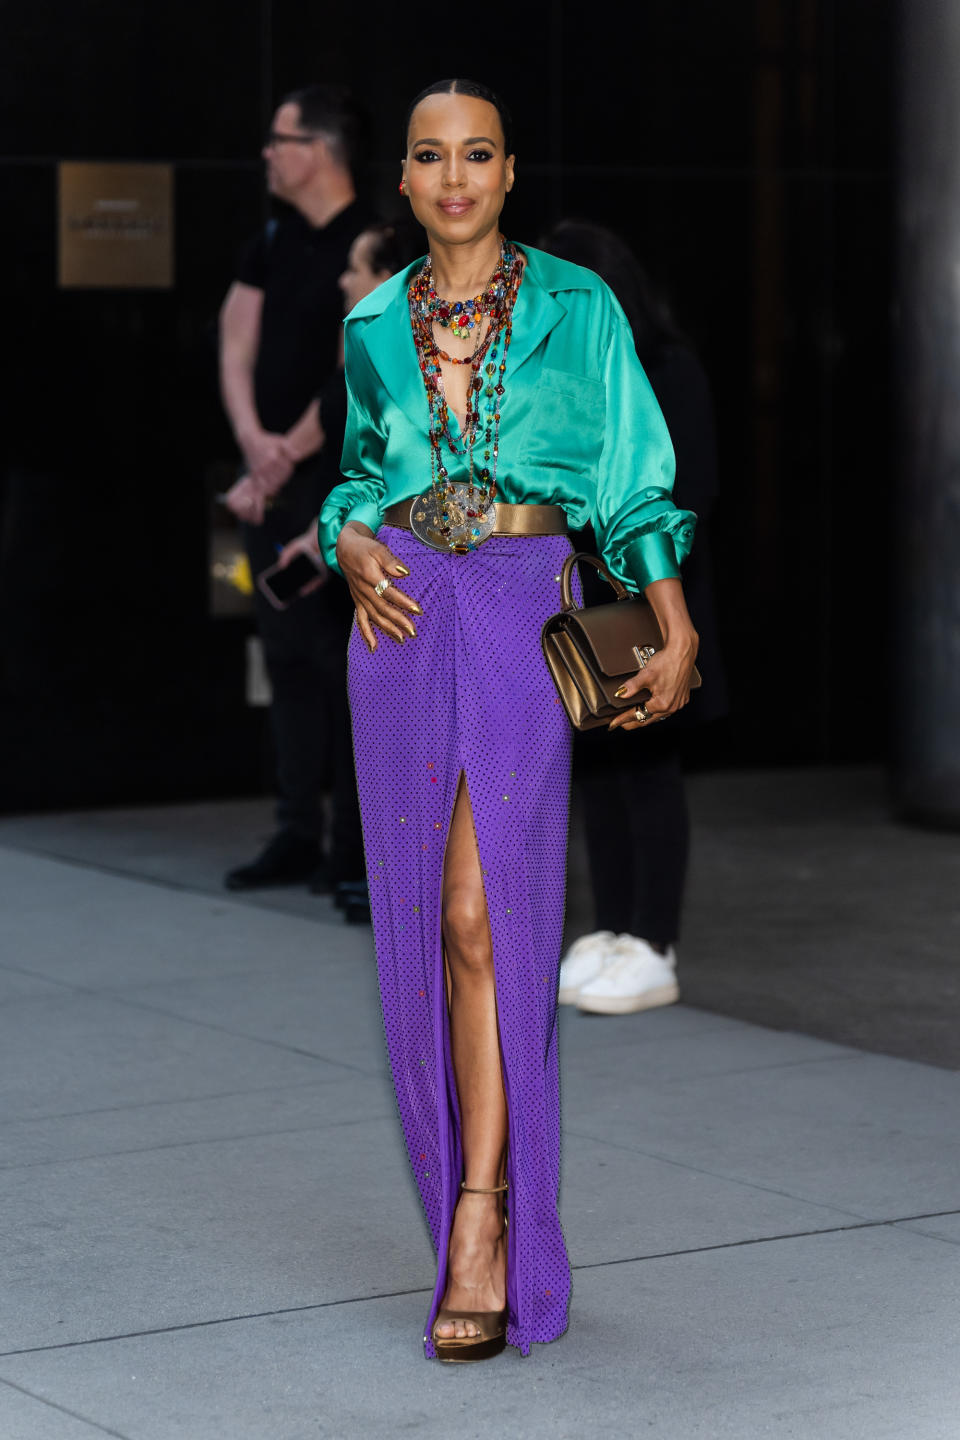 Kerry Washington attends the Ralph Lauren fashion show in Jimmy Choo platform sandals